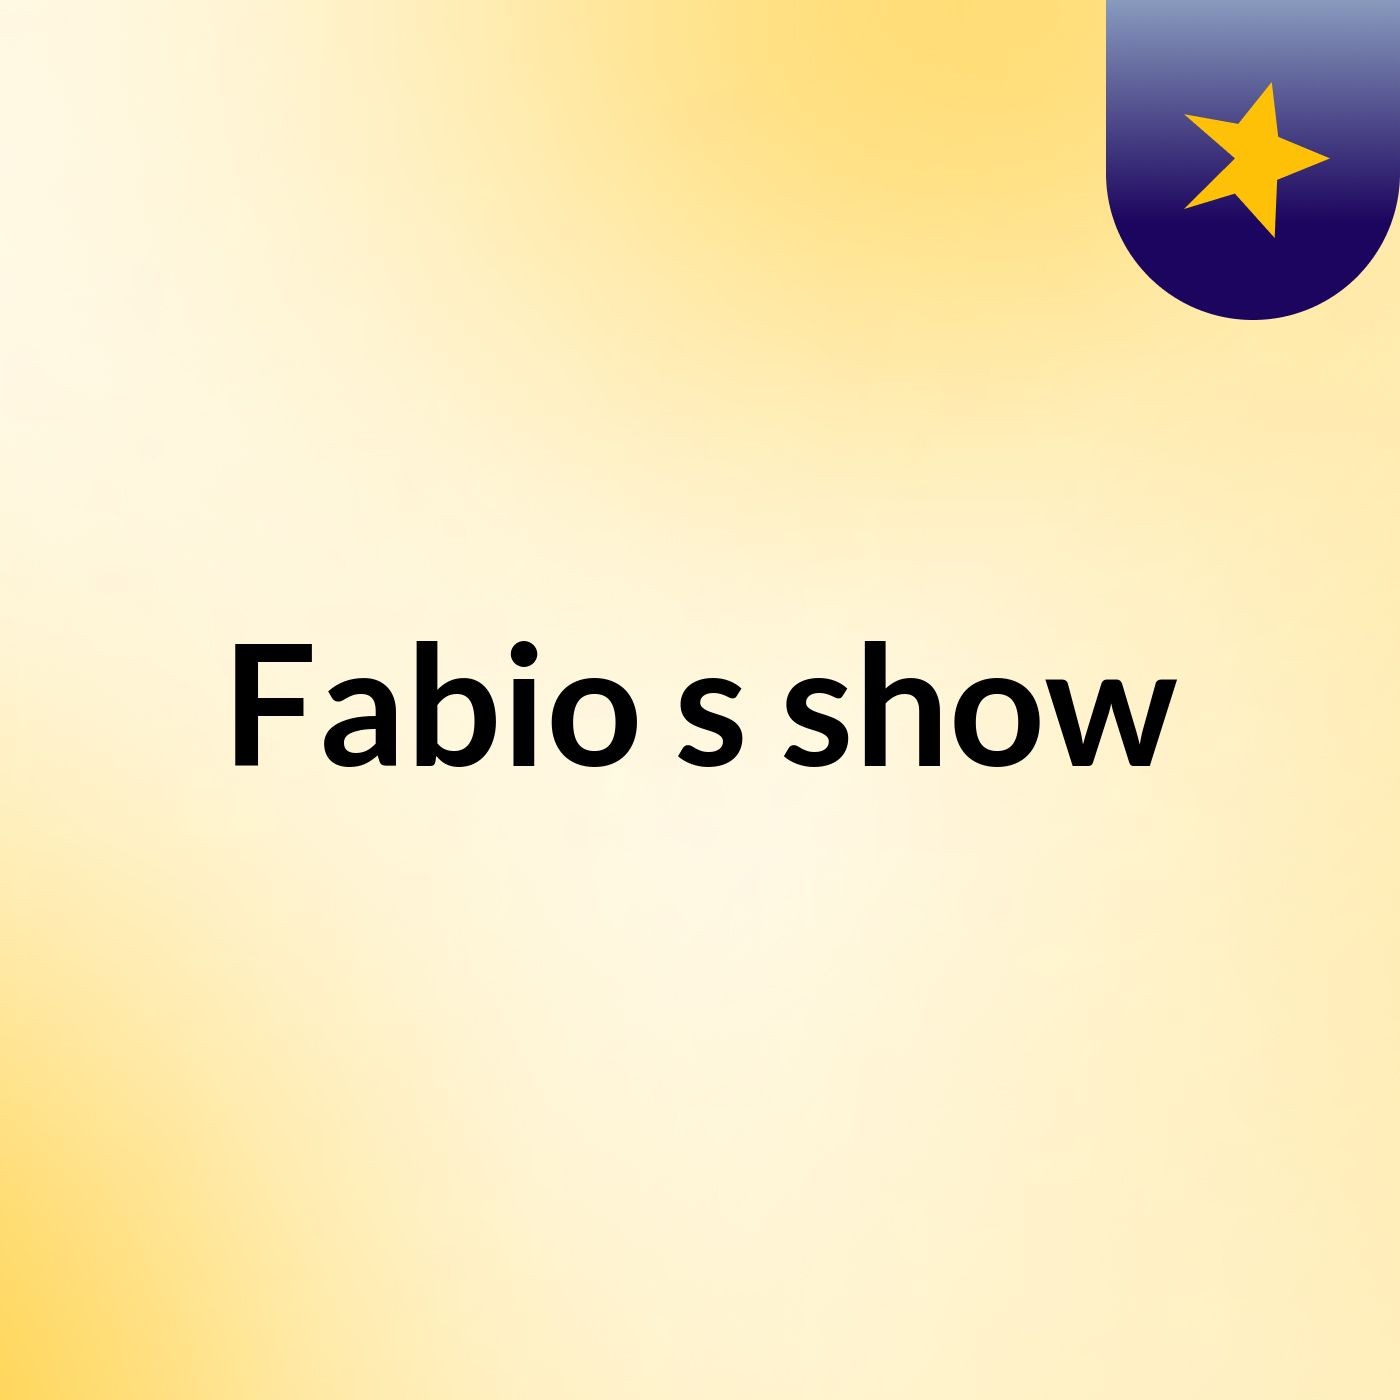 Fabio's show